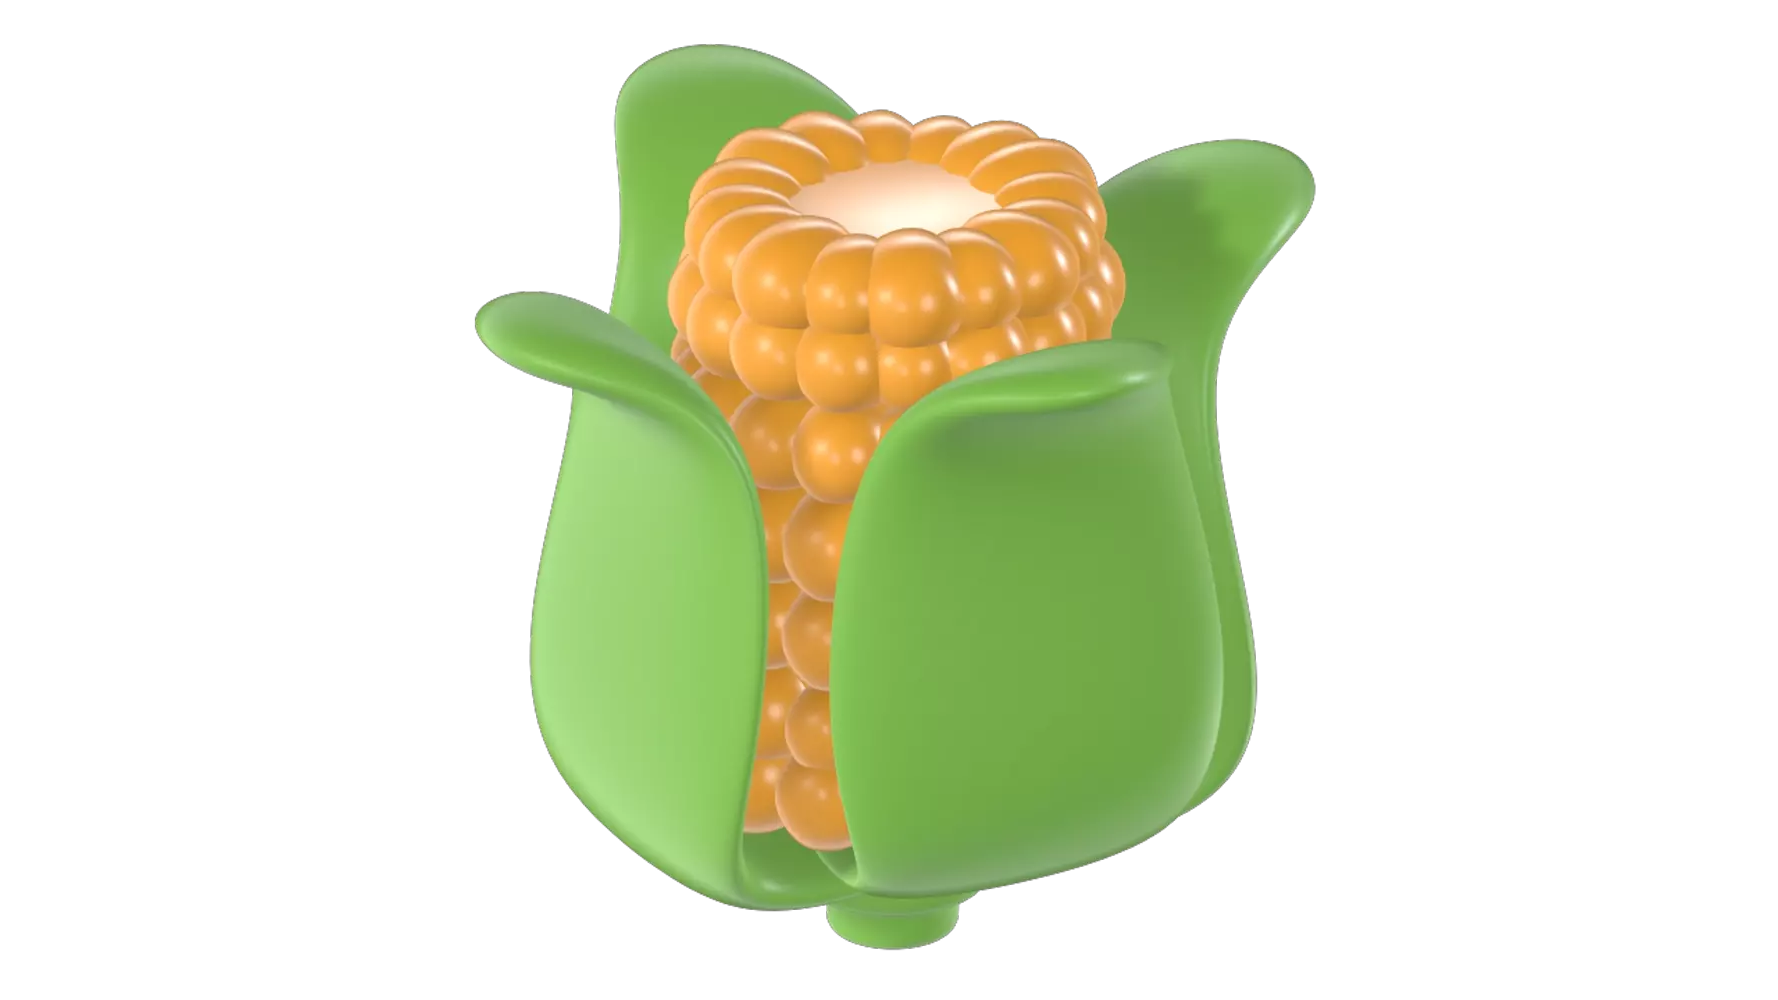 Corn 3D Graphic